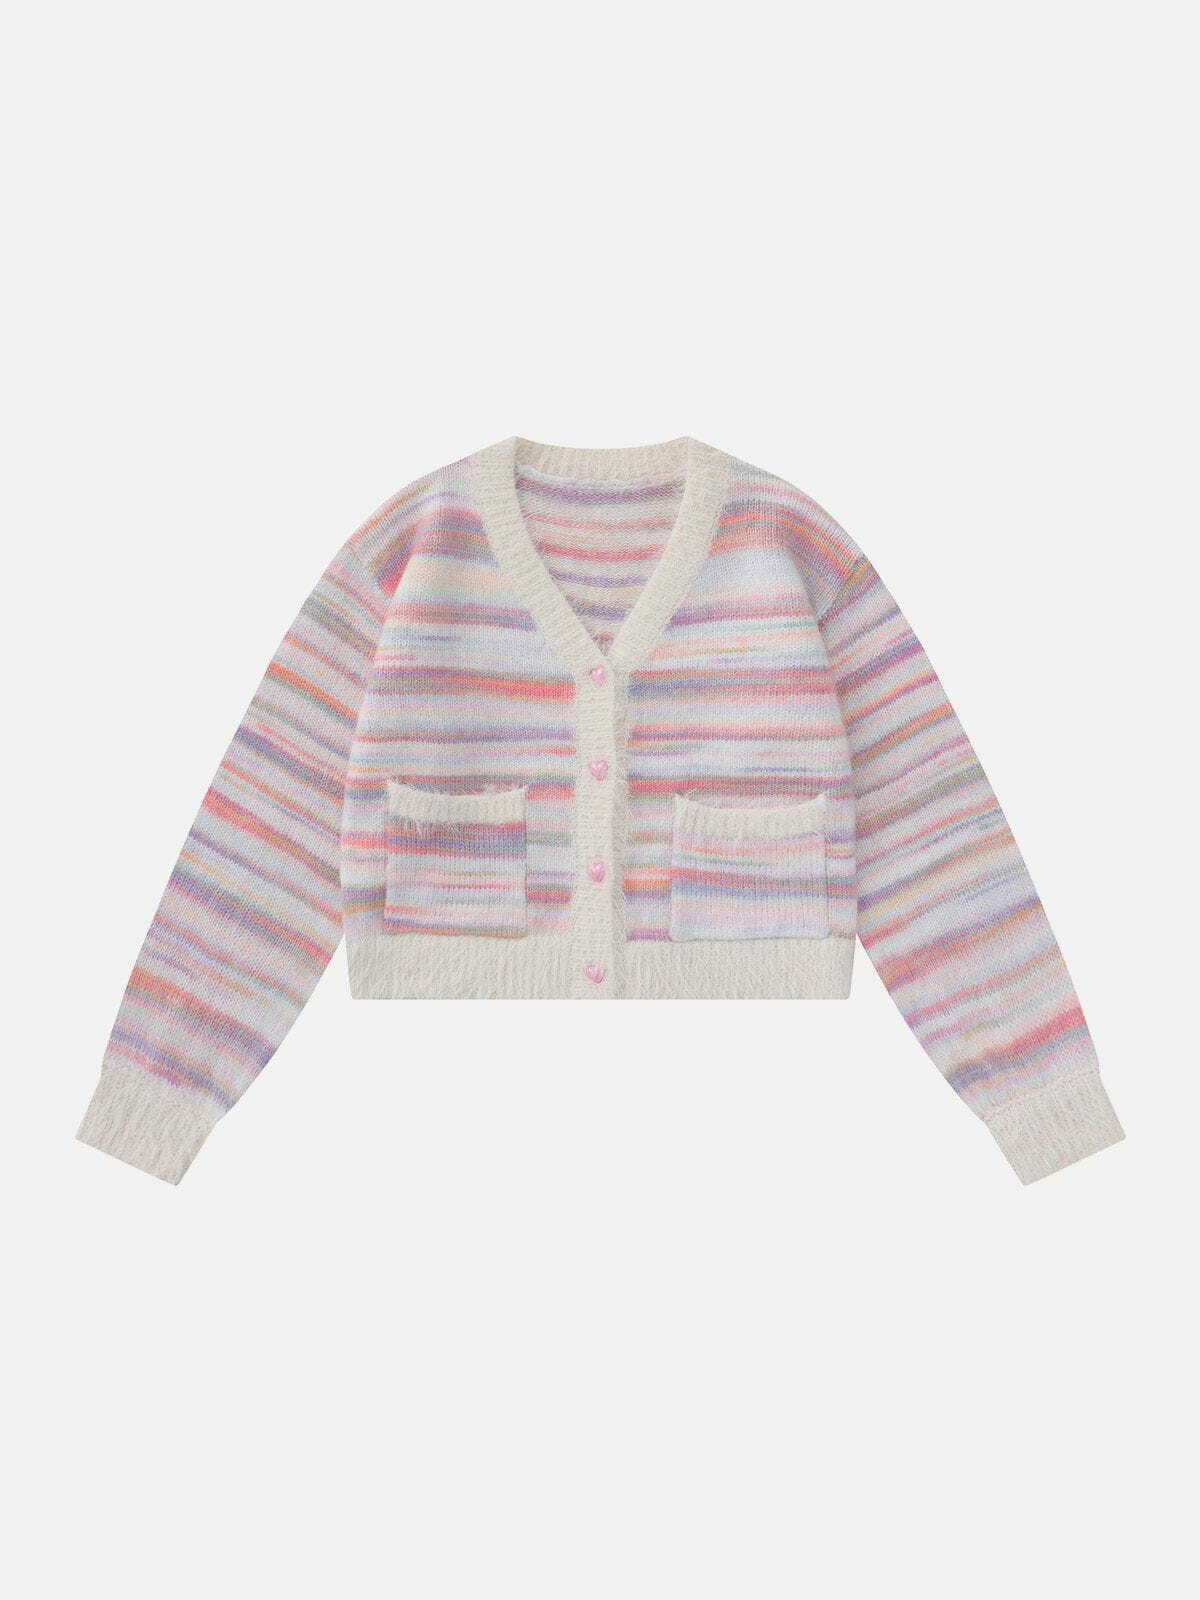 colorful striped cardigan youthful & chic streetwear 3842